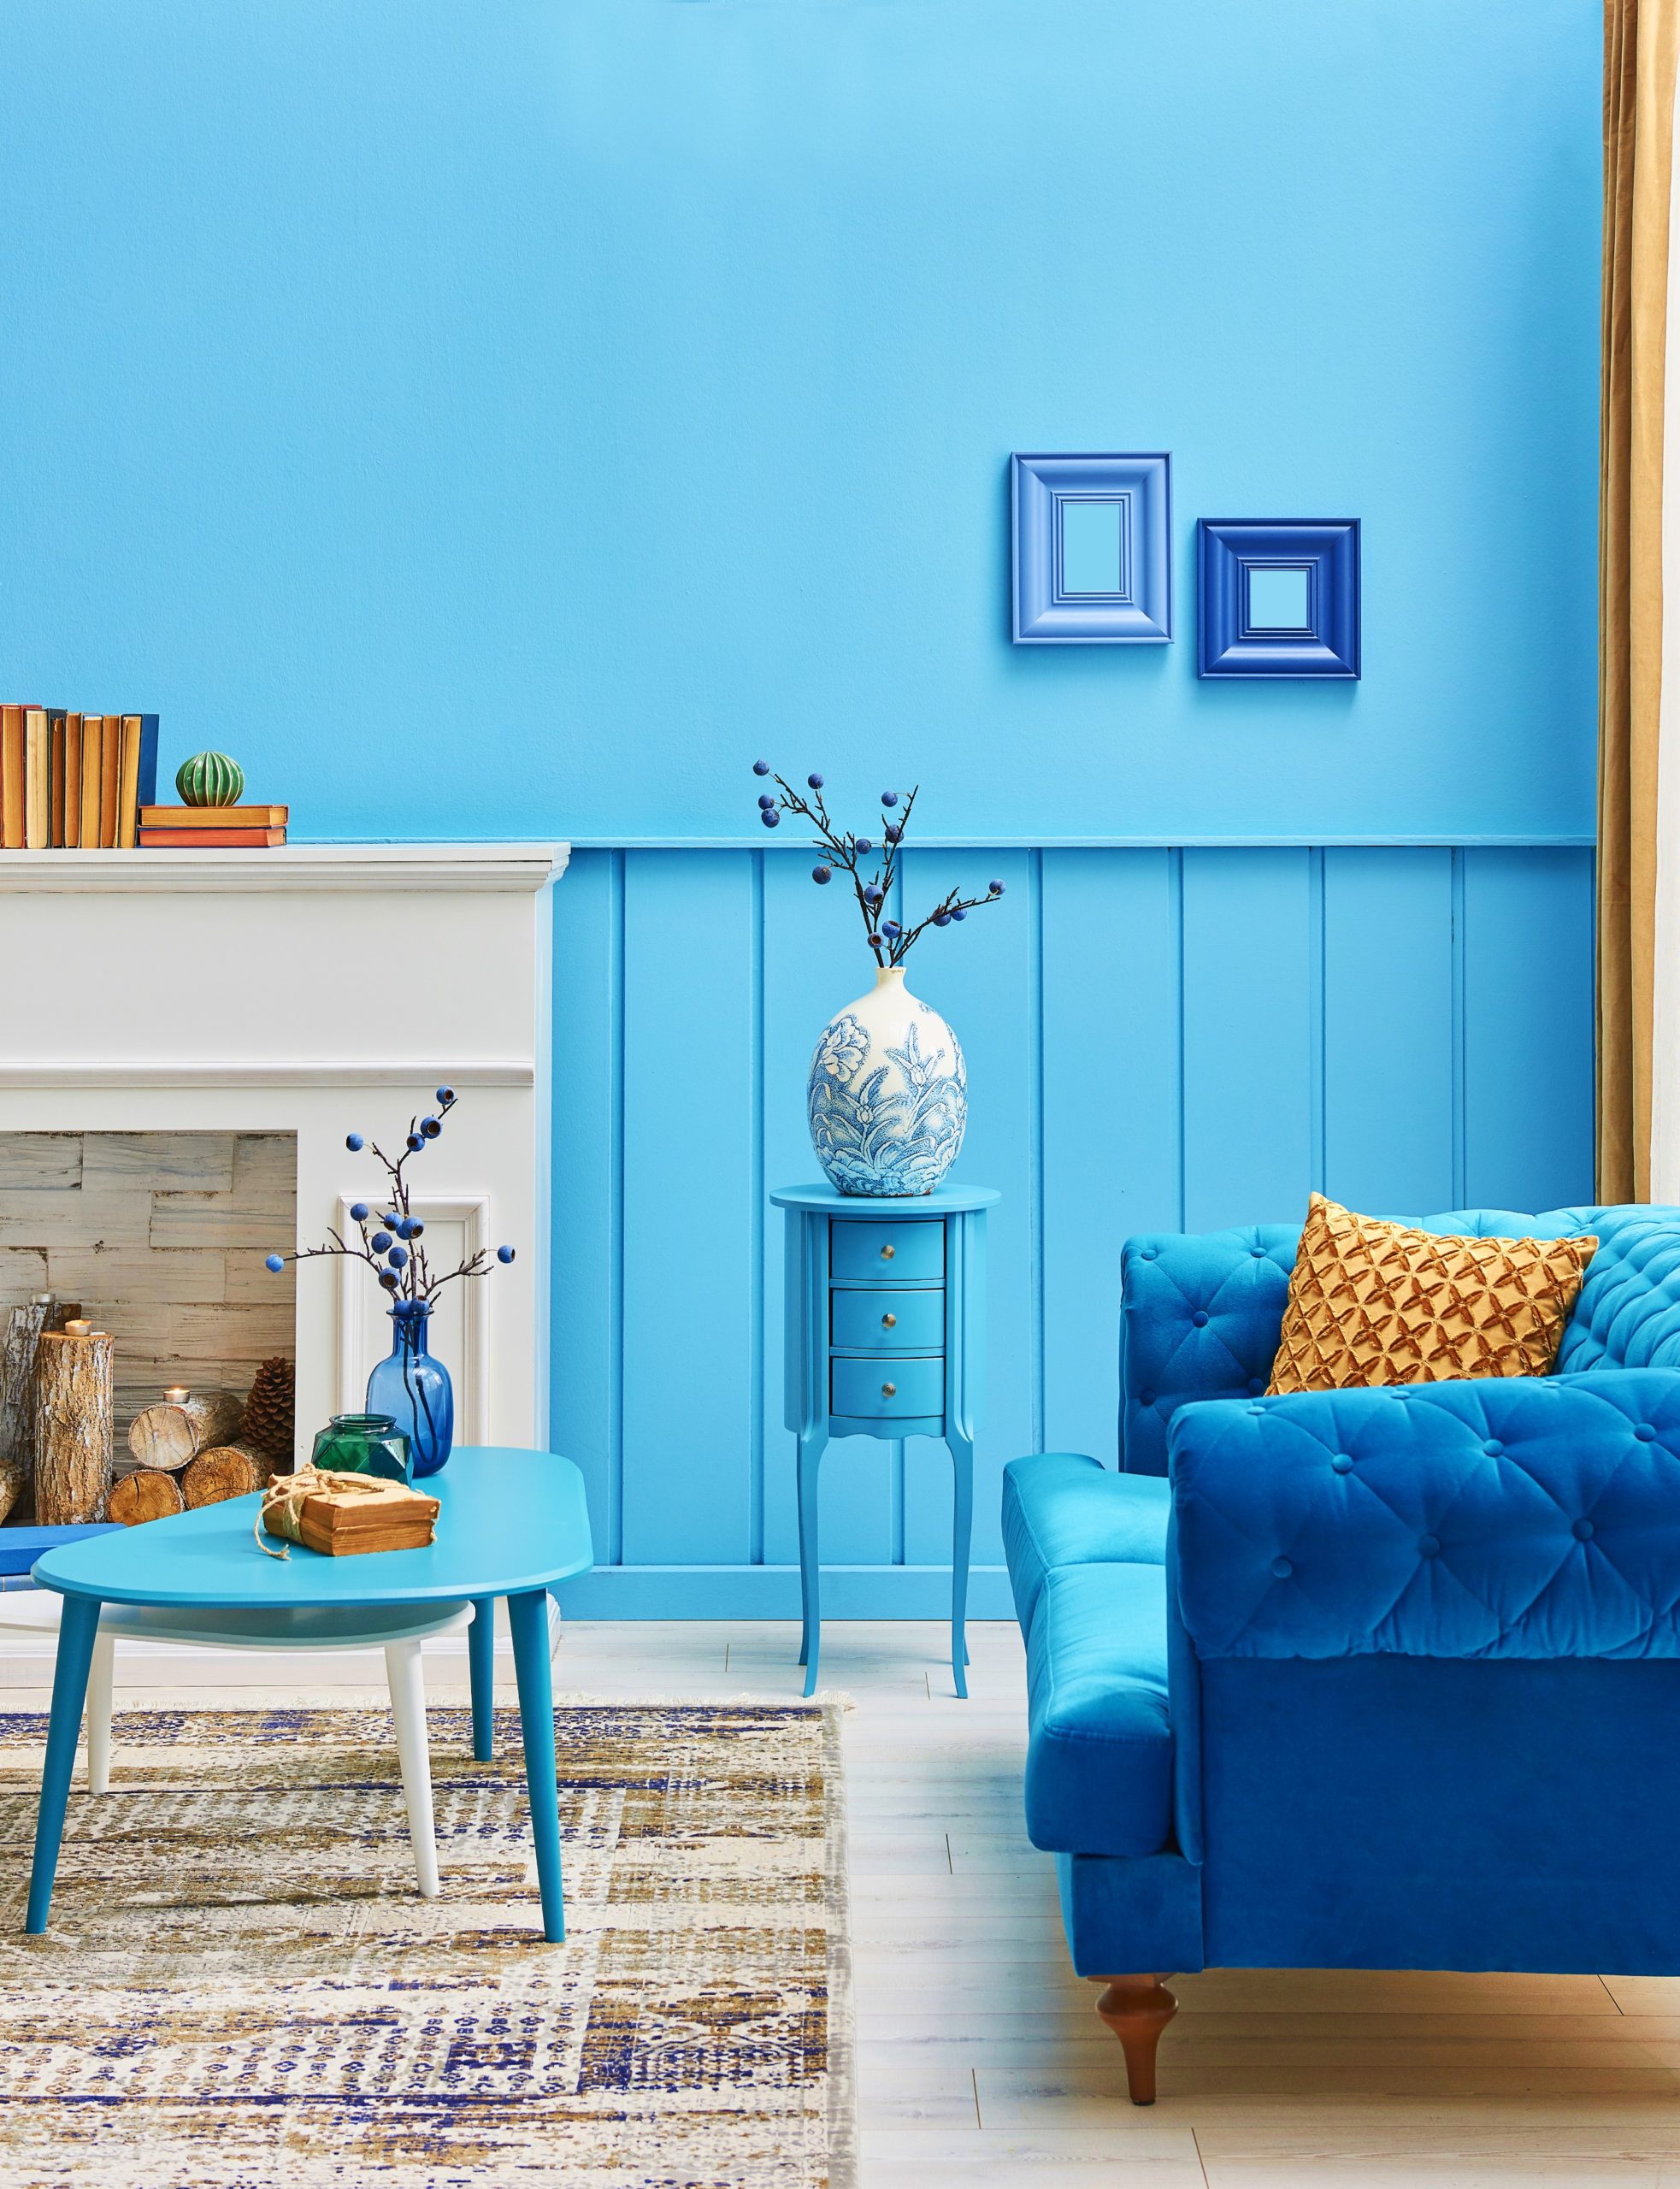 <img src="blue.jpg" alt="blue living room with orange pillow"/> 